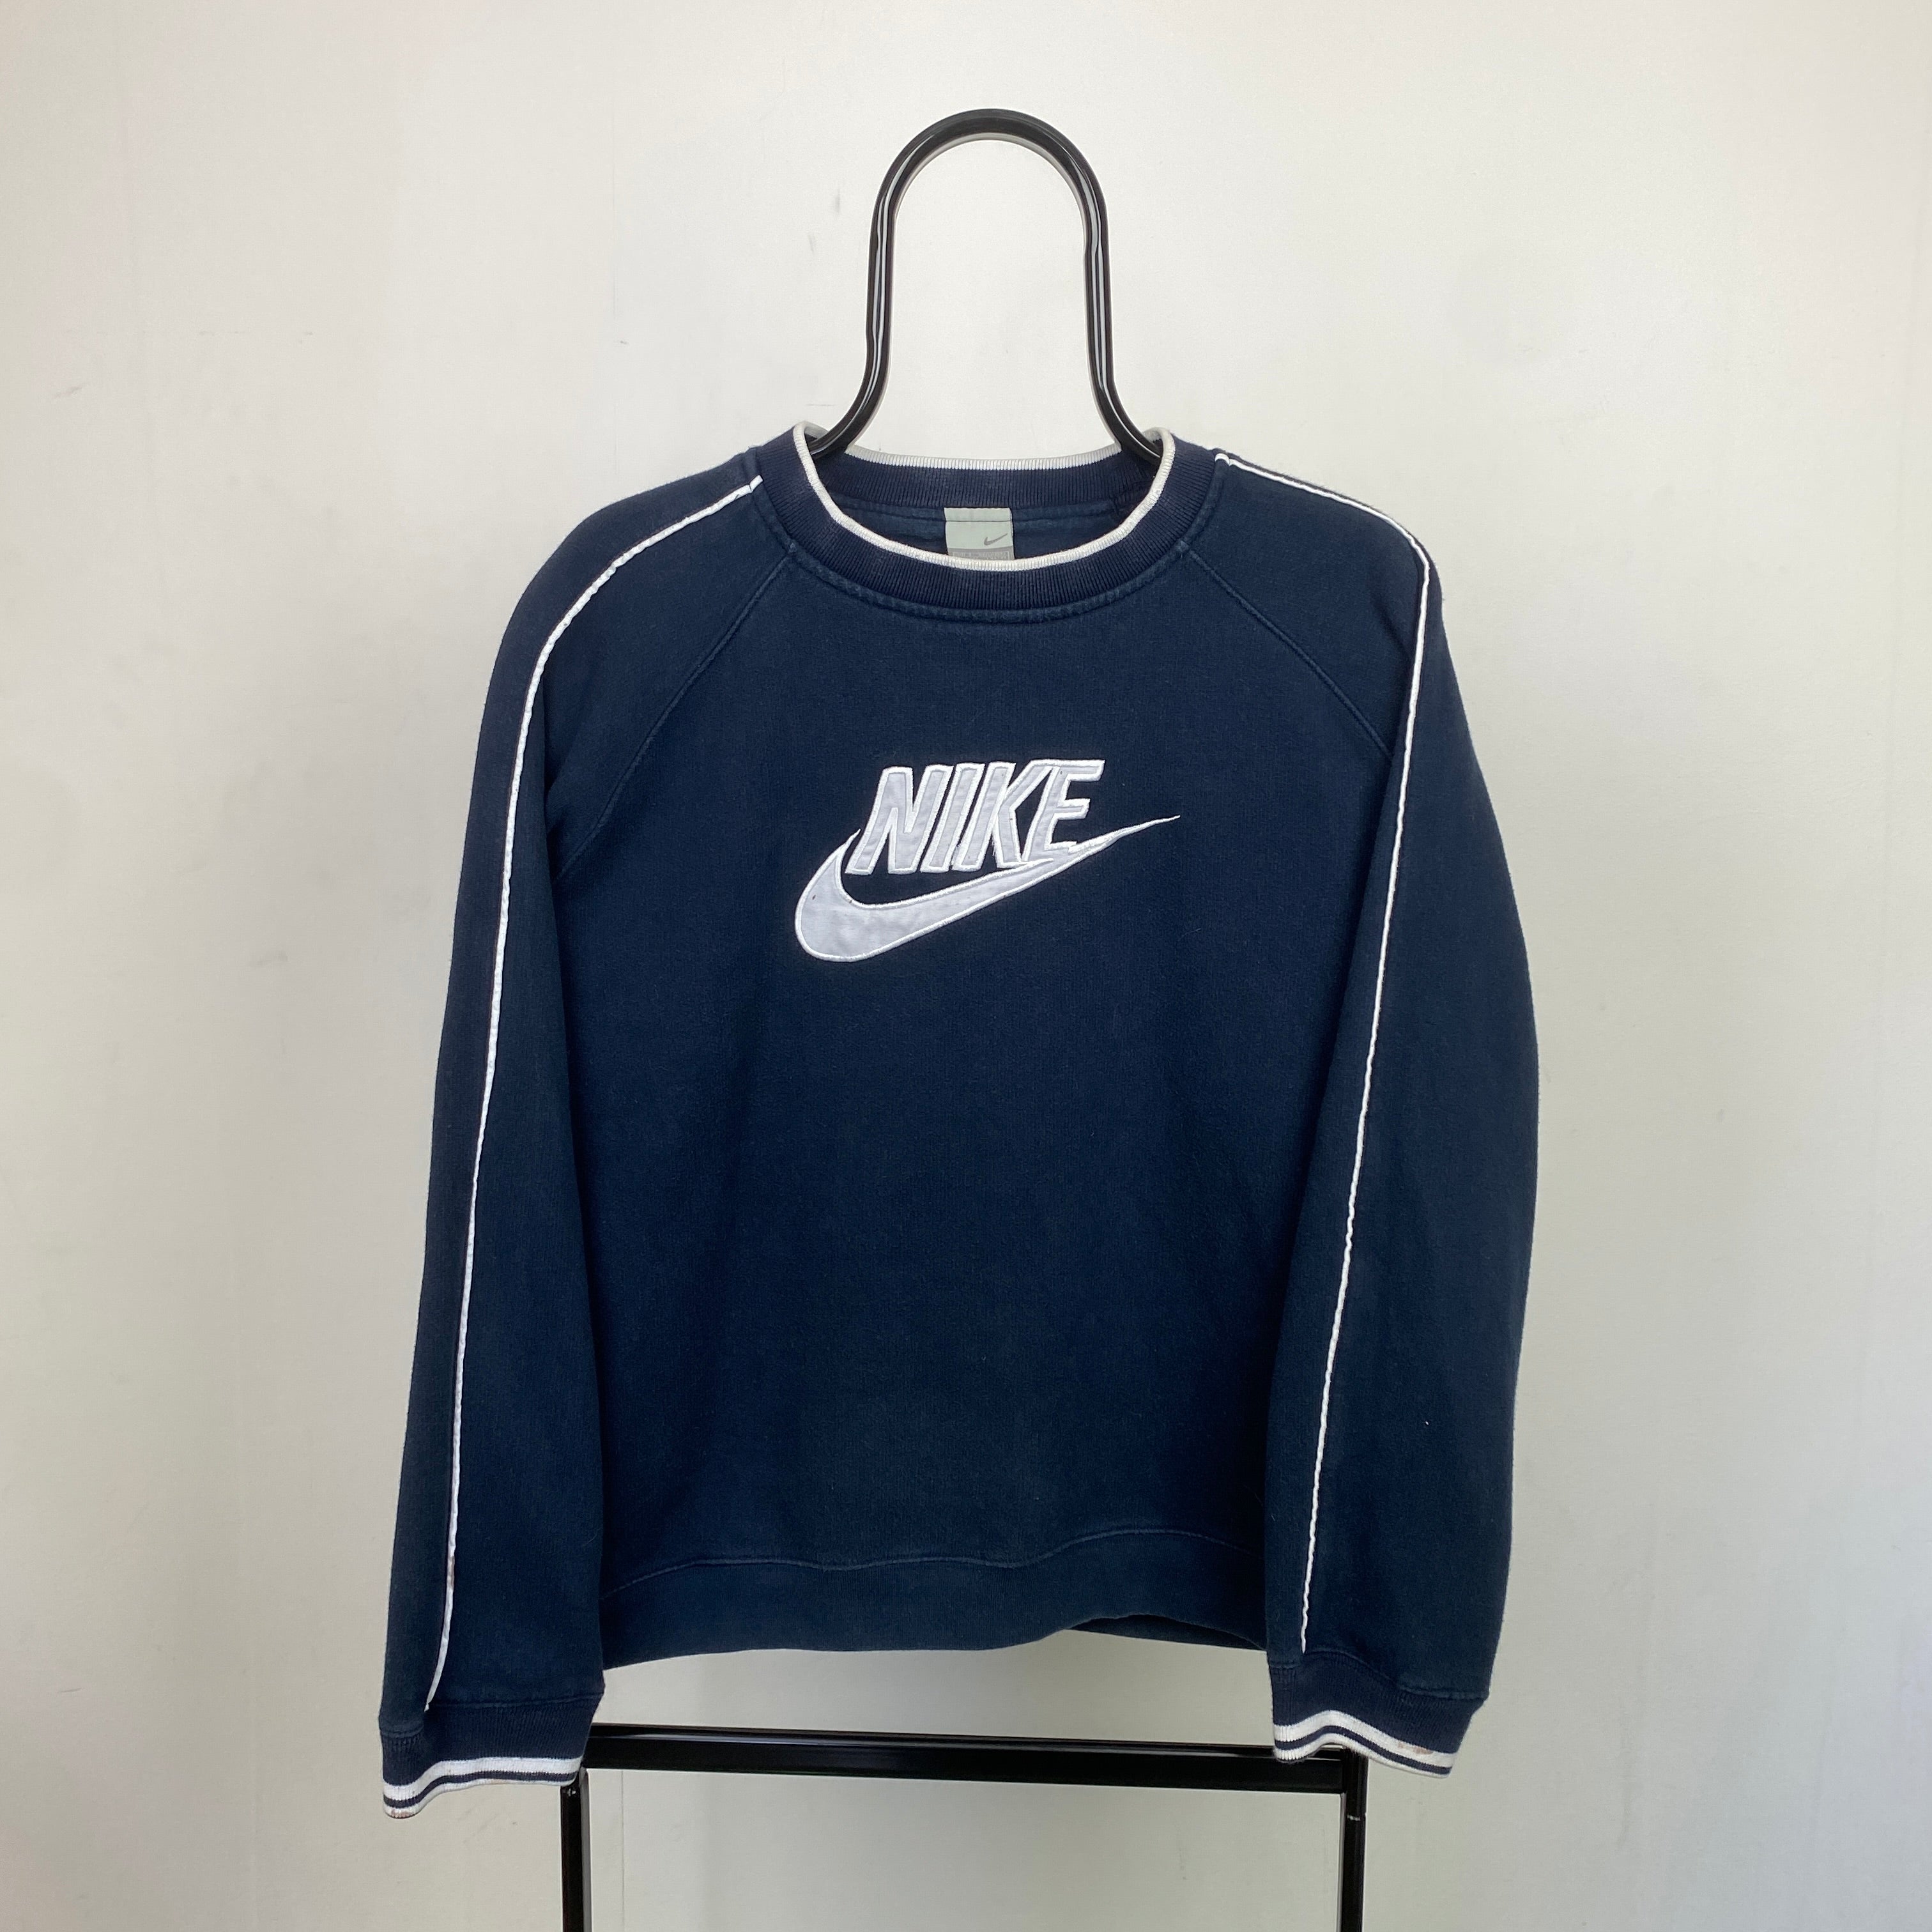 00s Nike Sweatshirt Blue Small